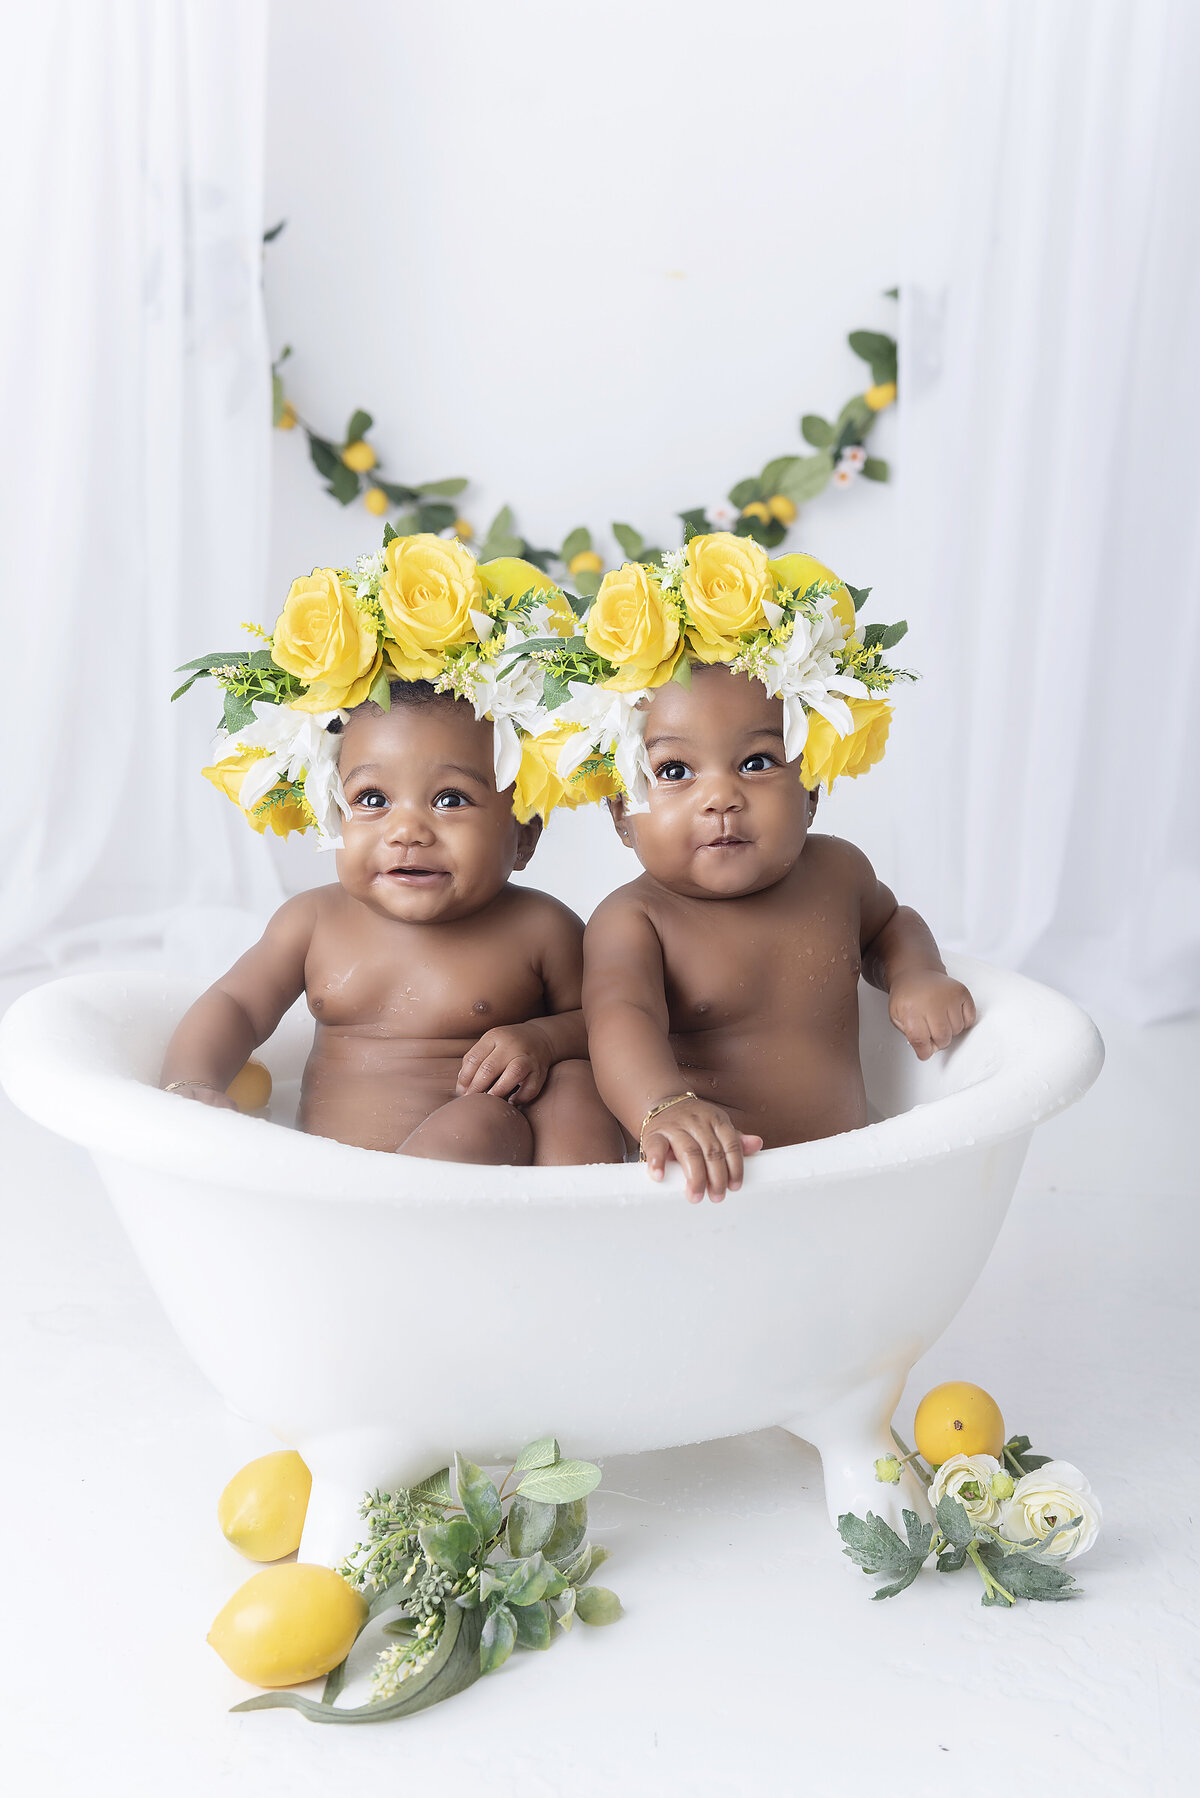 Twin girls sit in a bathrub in yellow floral headbands